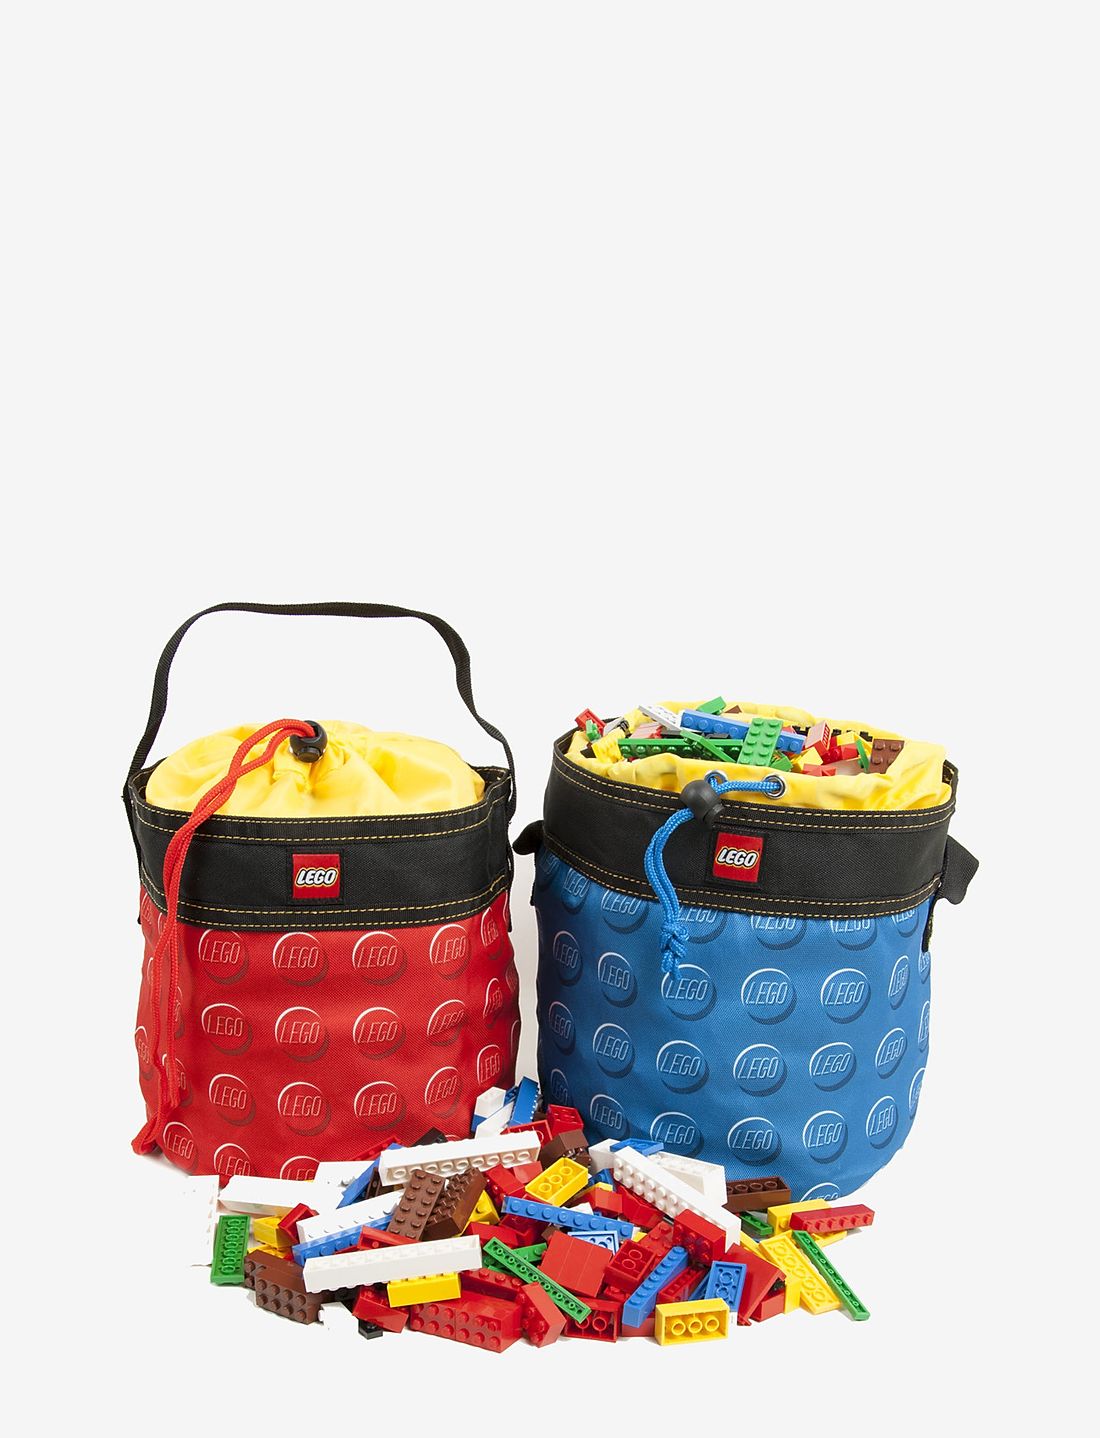 LEGO STORAGE Cinch bucket, red